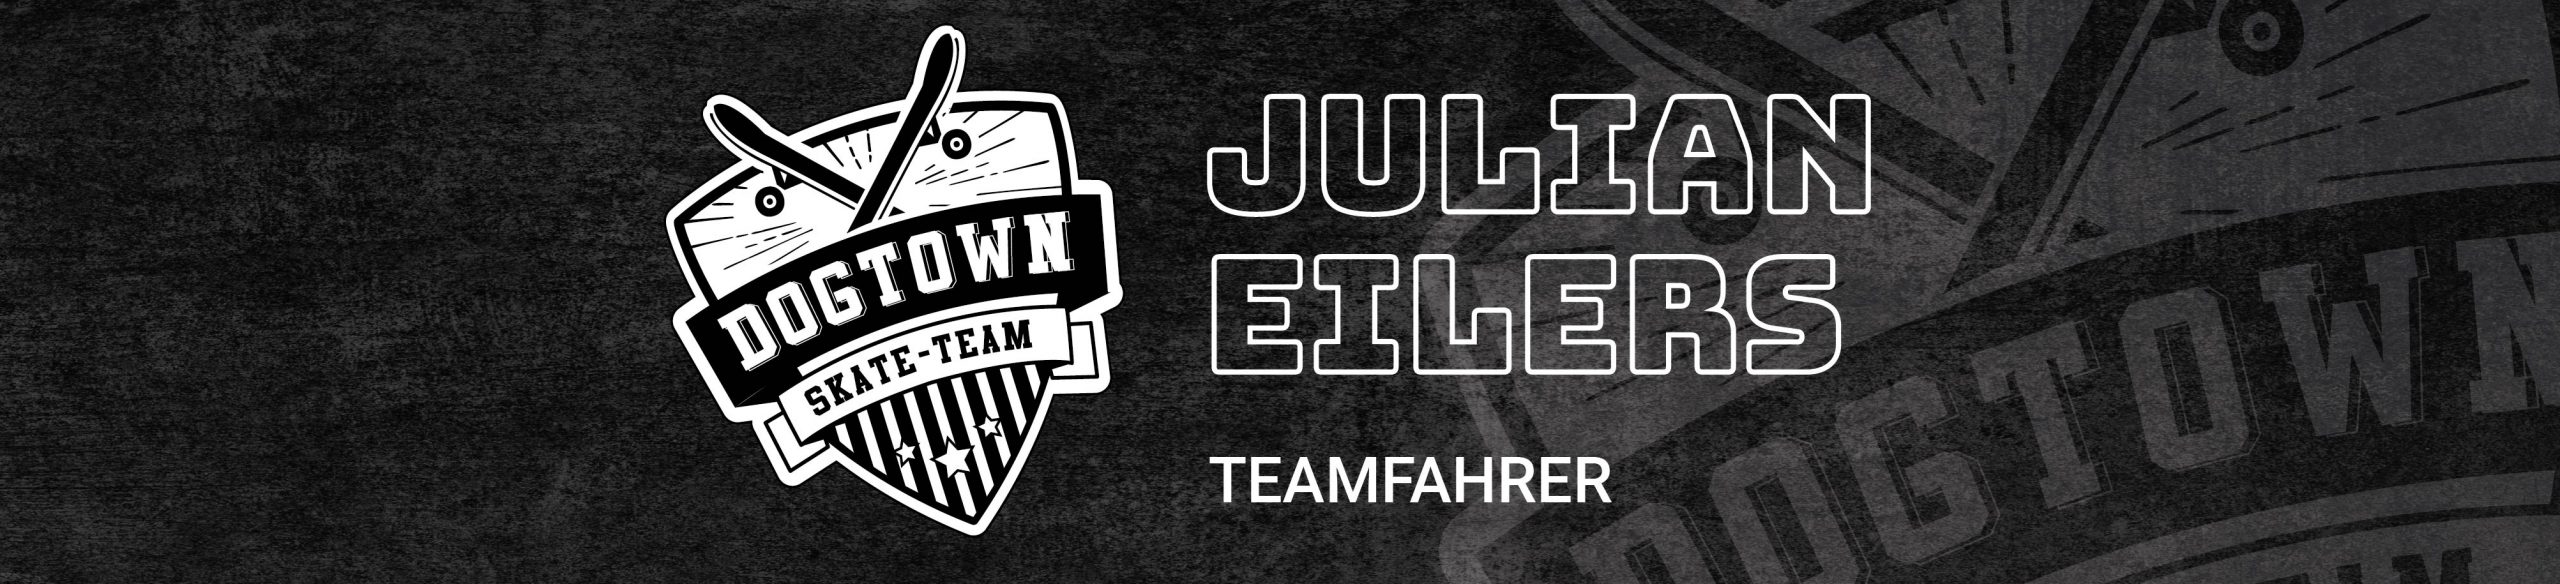 Julian Eilers Teamfahrer Dogtown-Skateshop